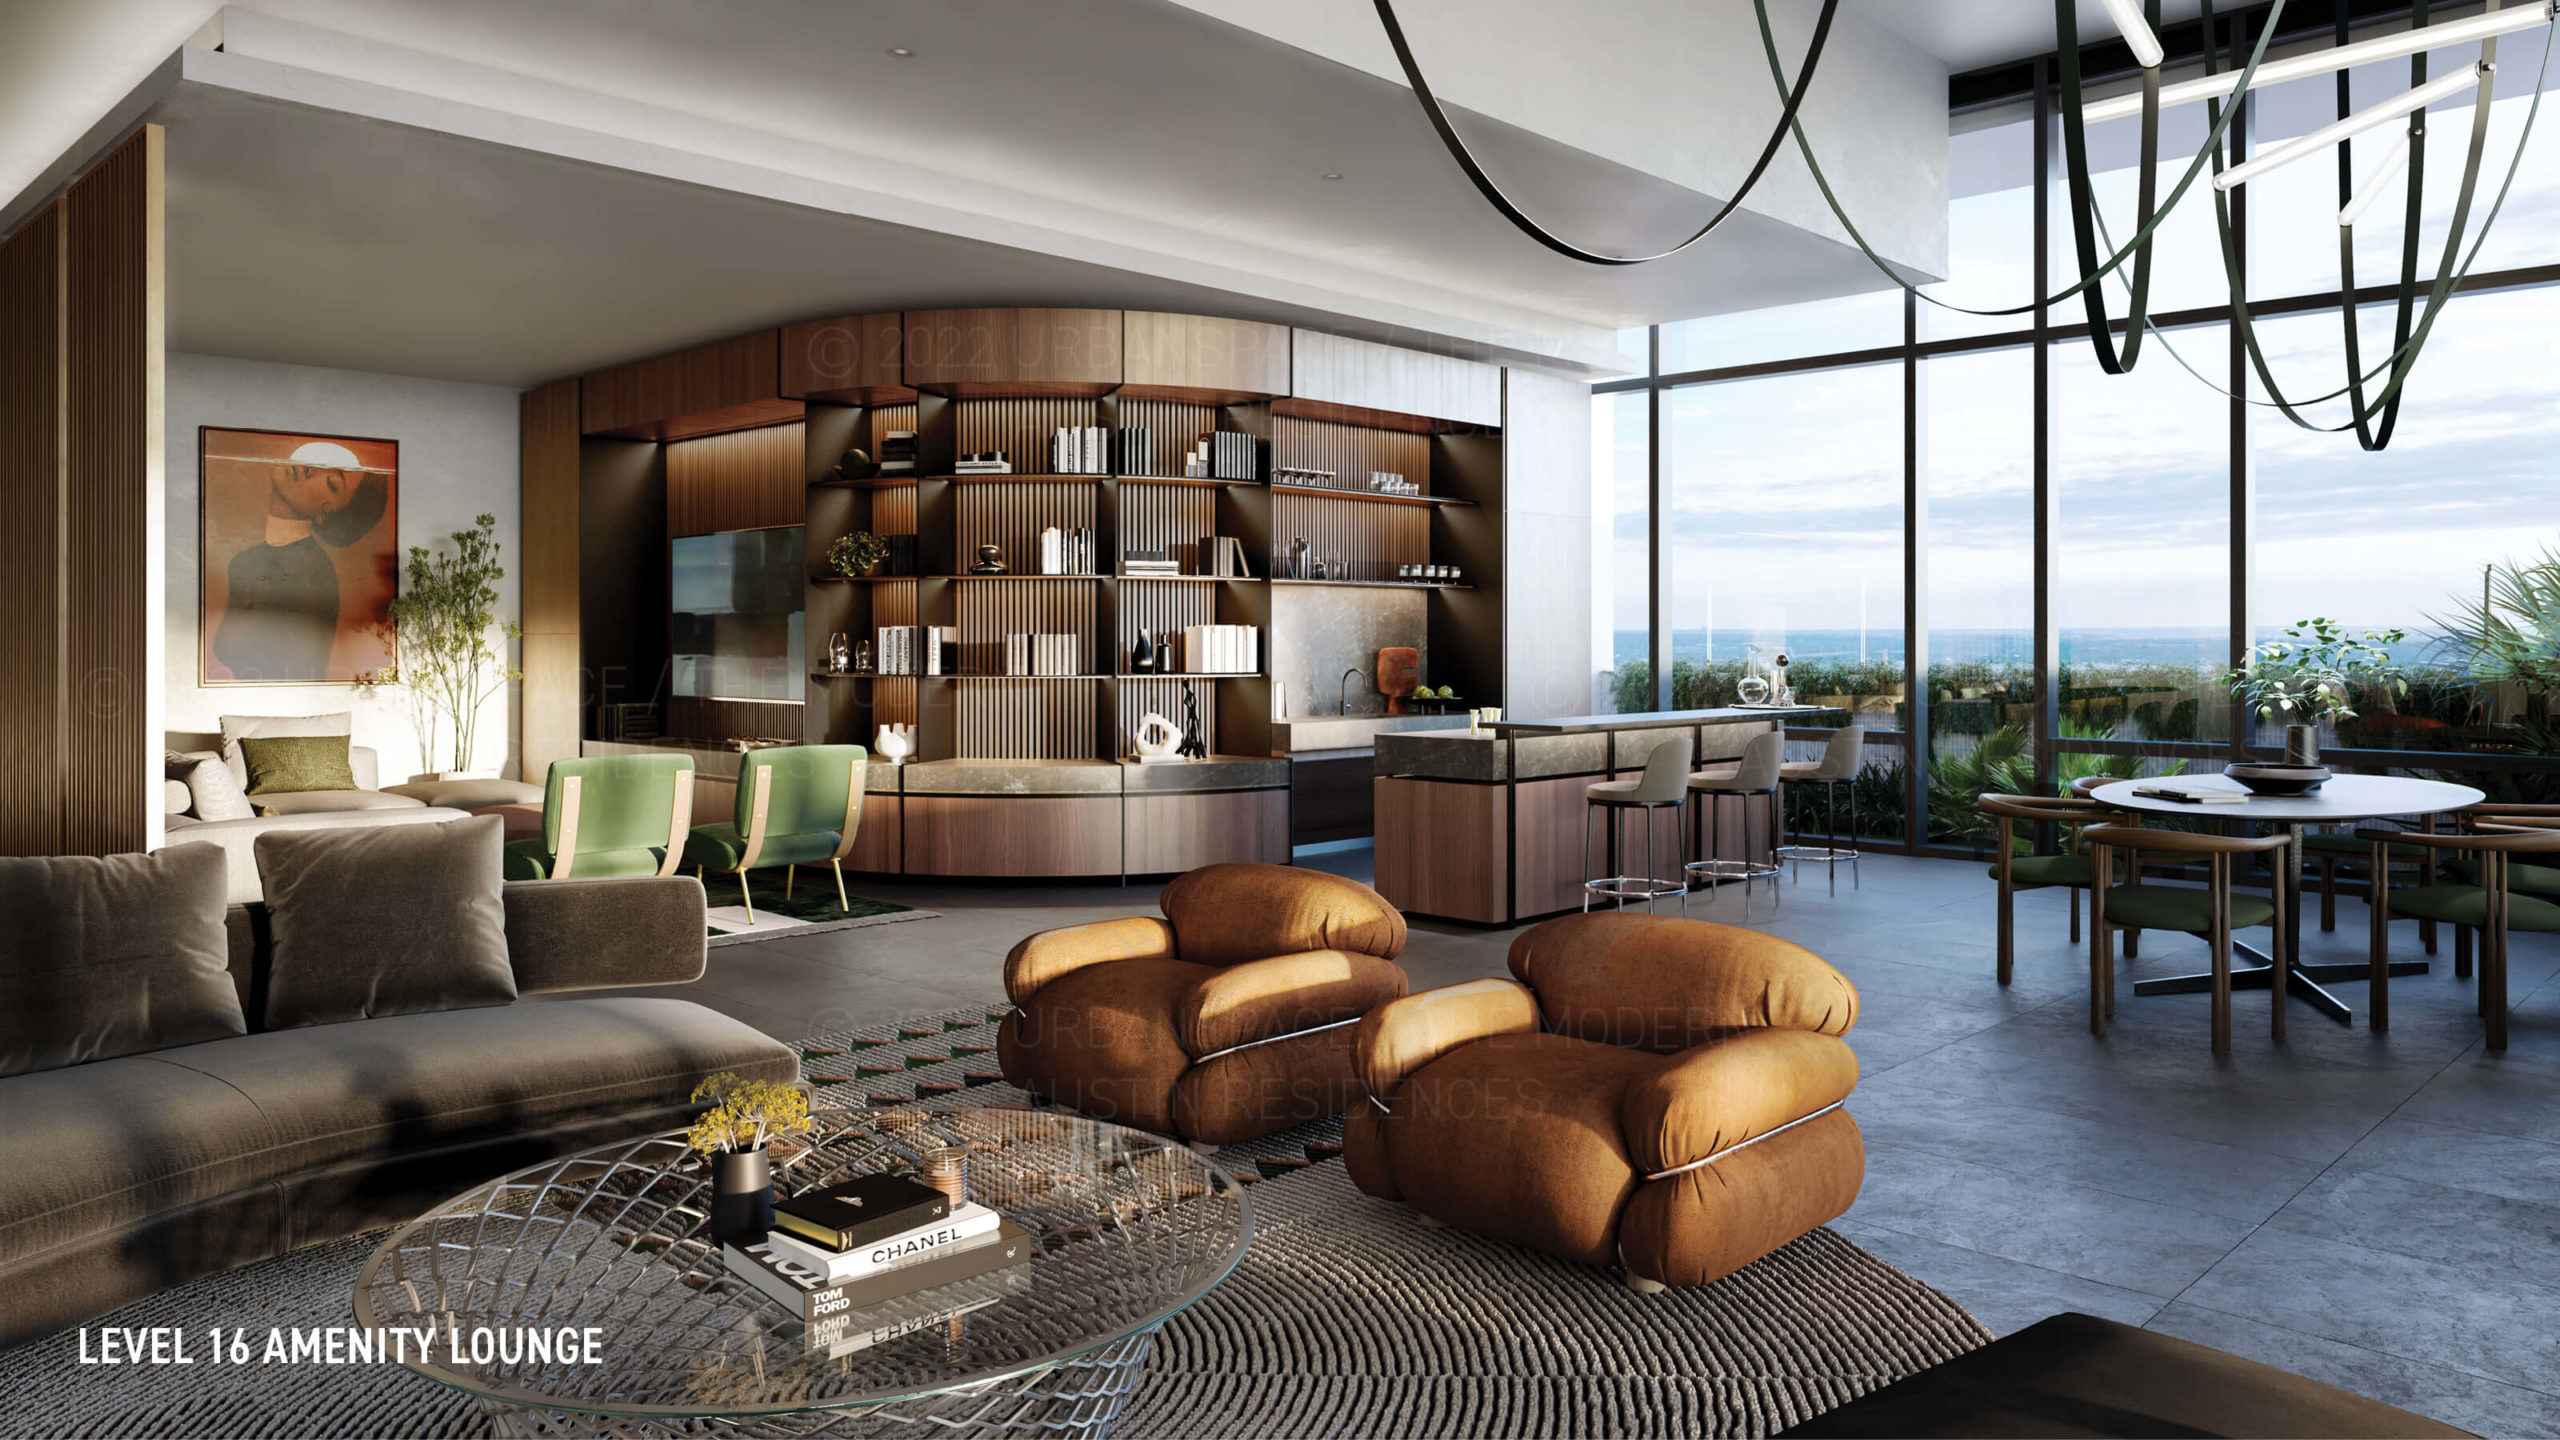 The Modern Austin Residences - 16th Floor Amenity Lounge rendering